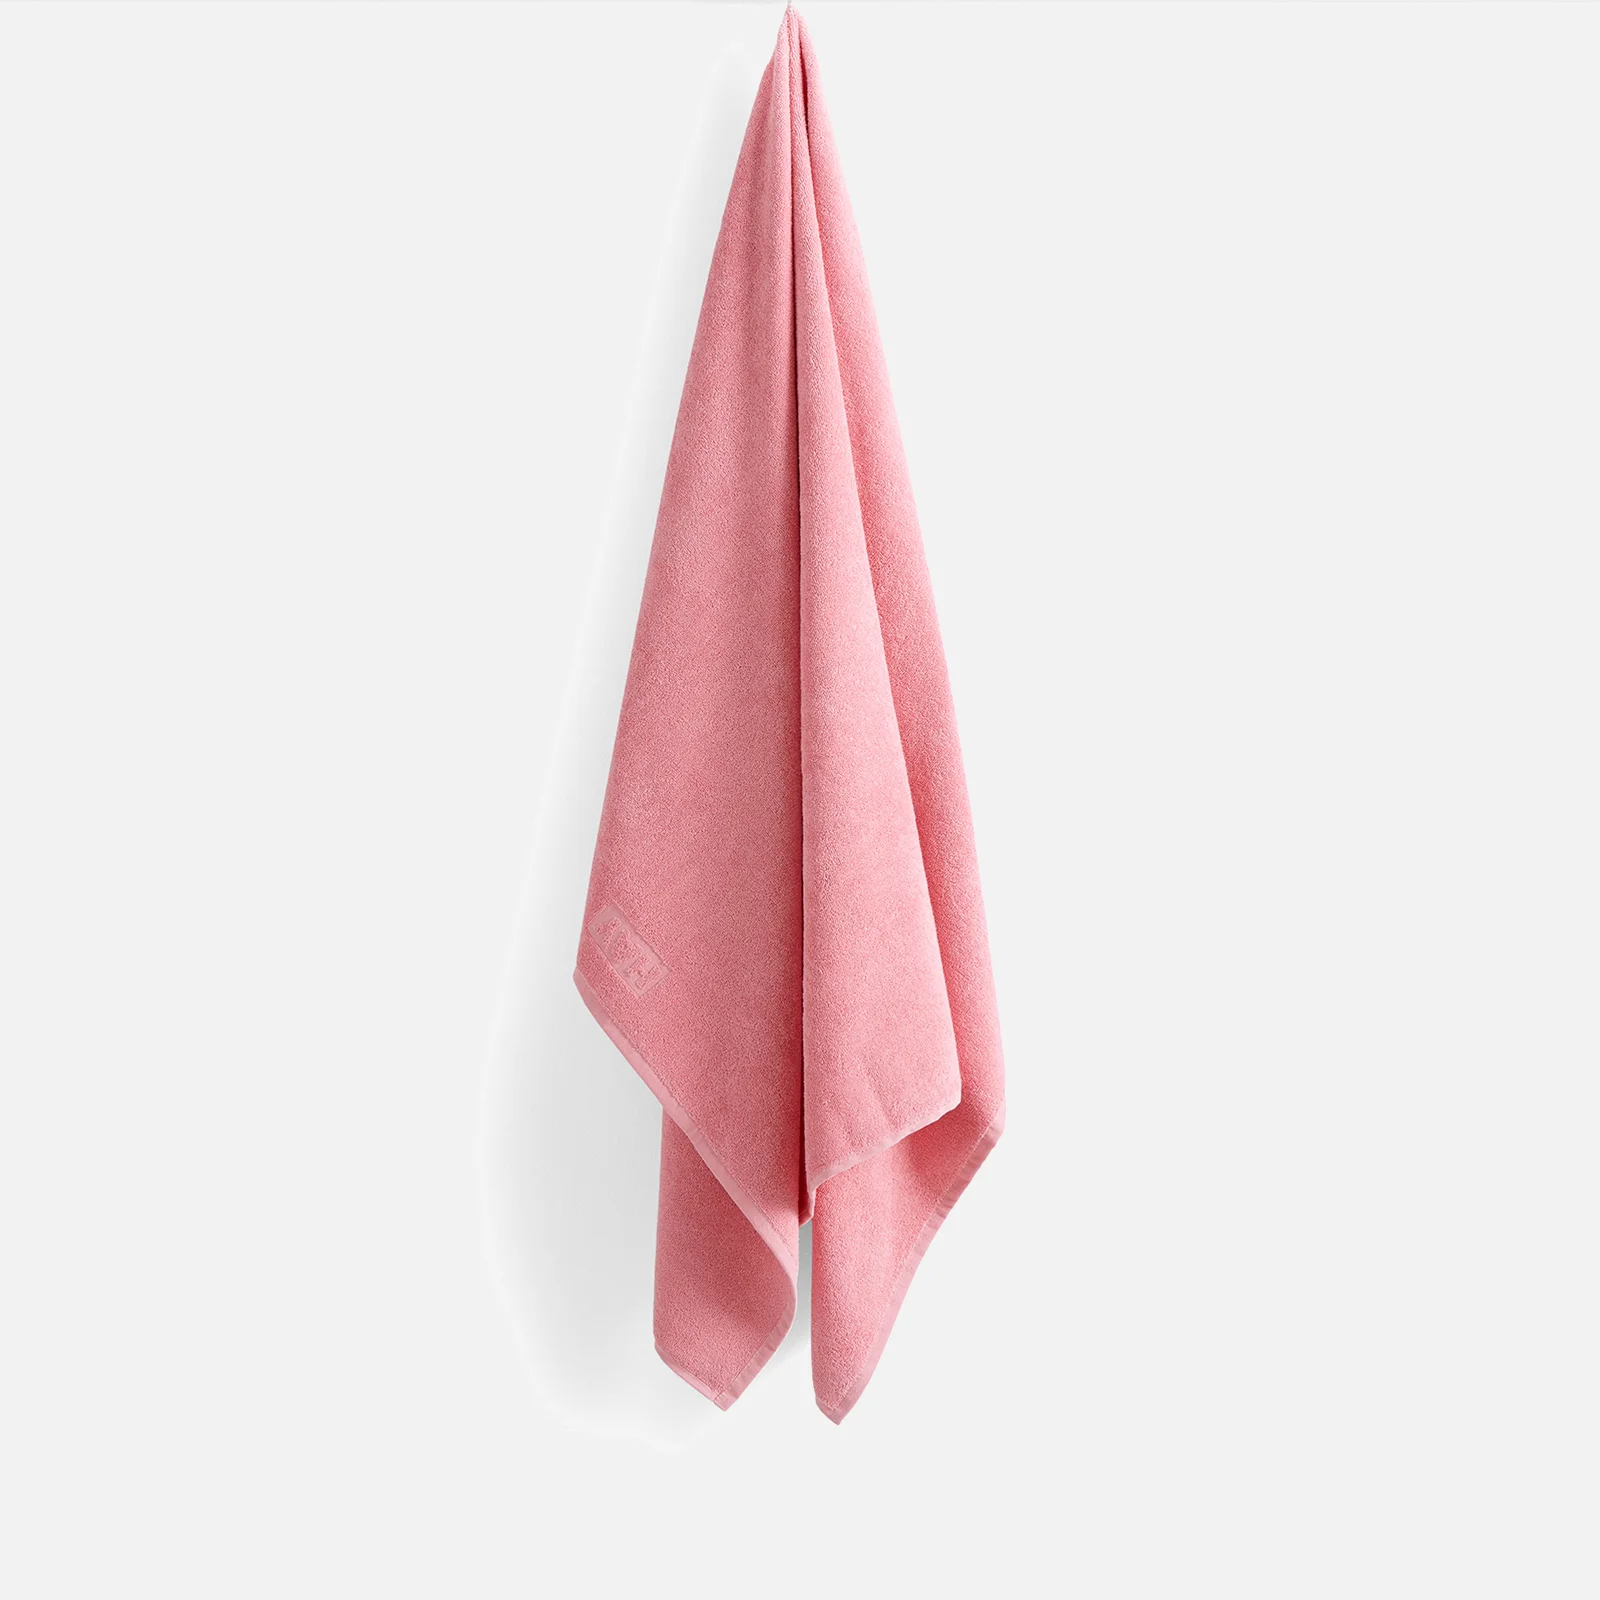 HAY Mono Towel - Pink - Hand Image 1